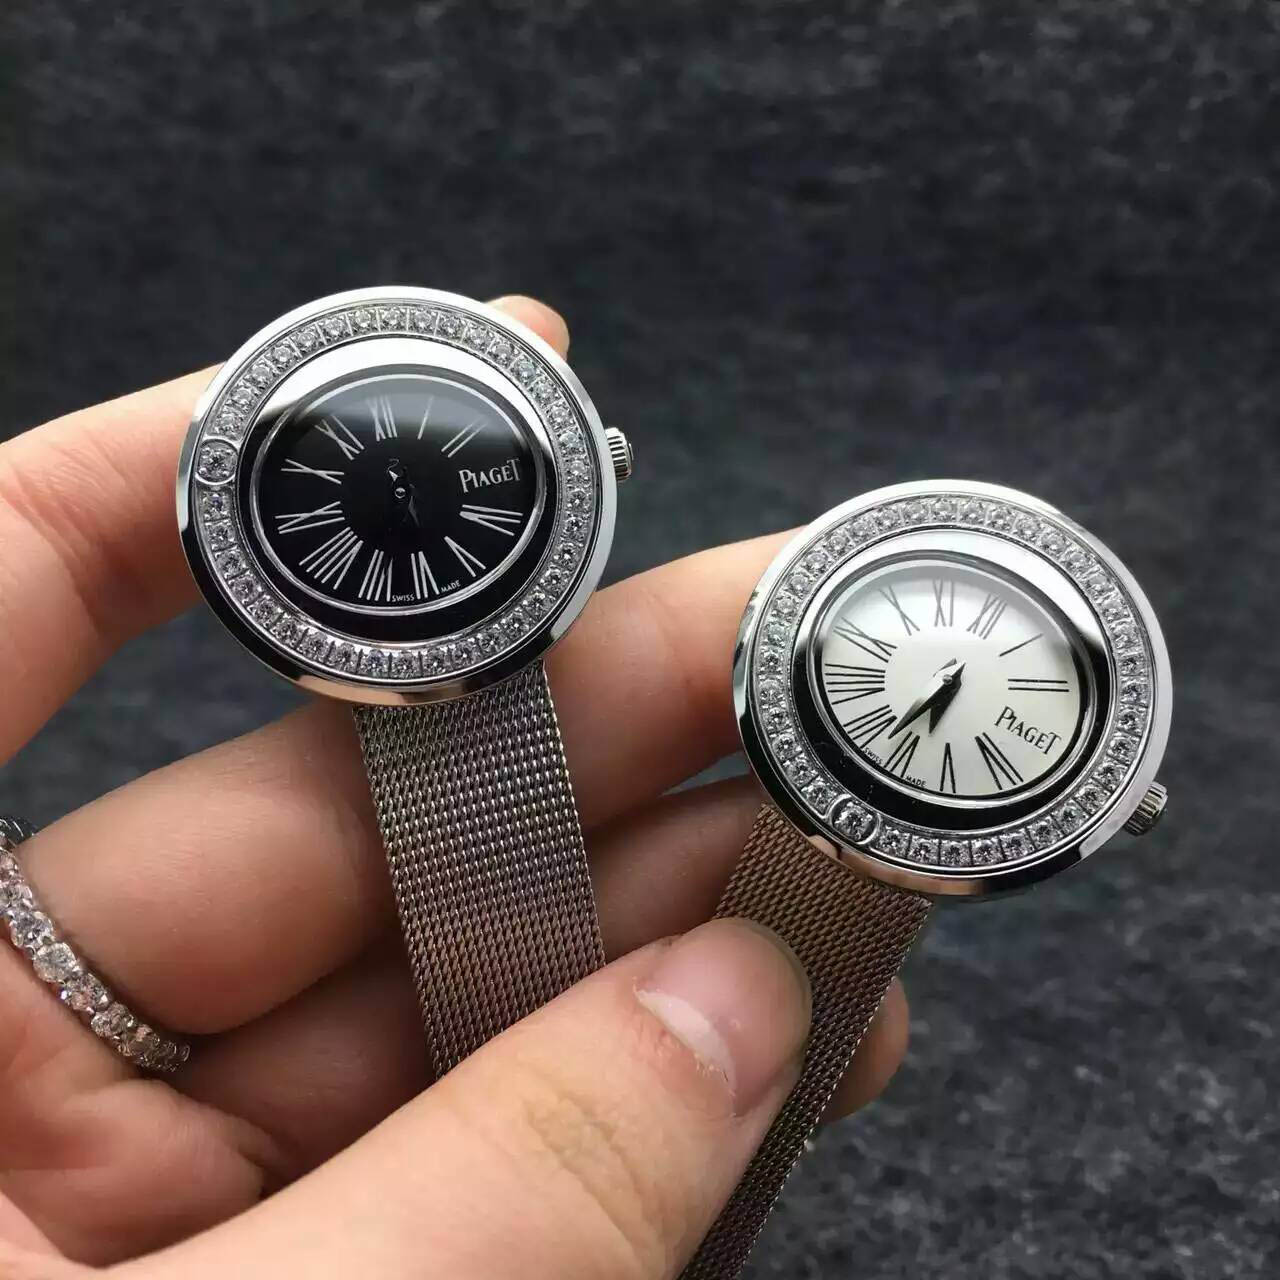 3A伯爵 - PIAGET 女士腕錶 內側鑲嵌48顆進口水晶鑽